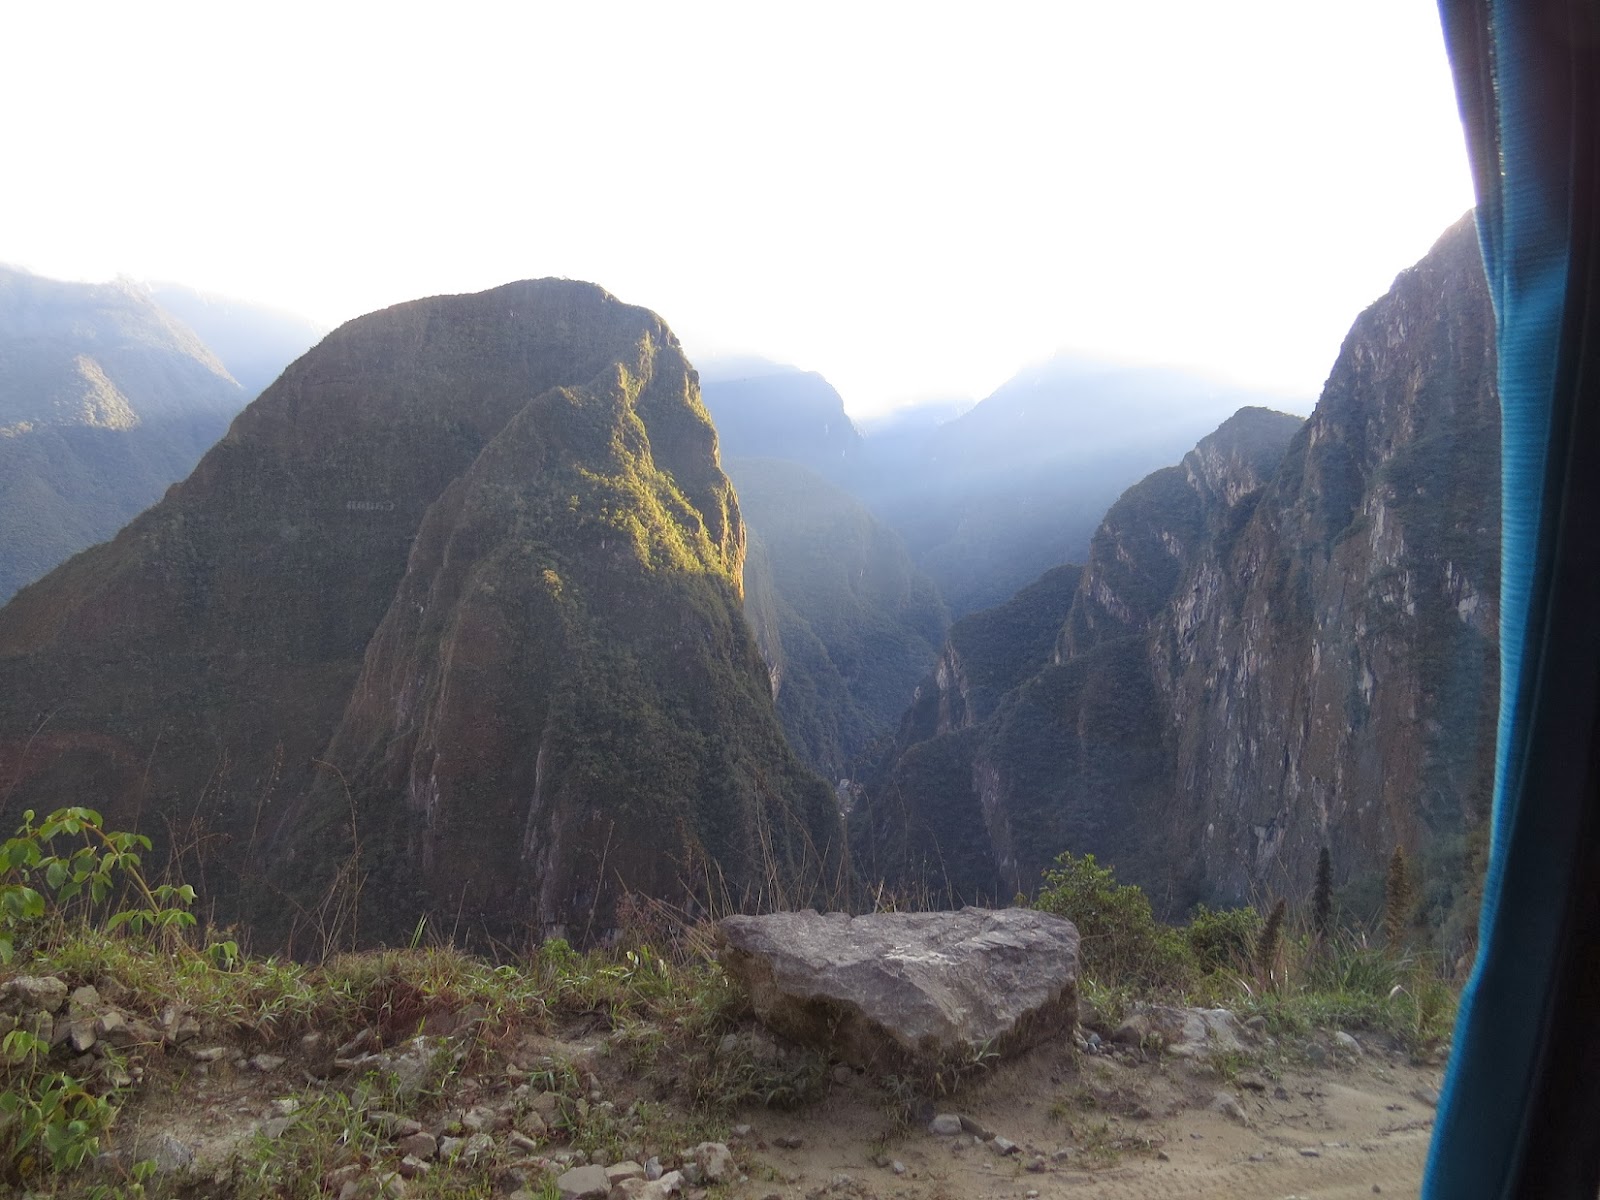 Bela montanha vista da estrada para Machu Picchu / Peru.